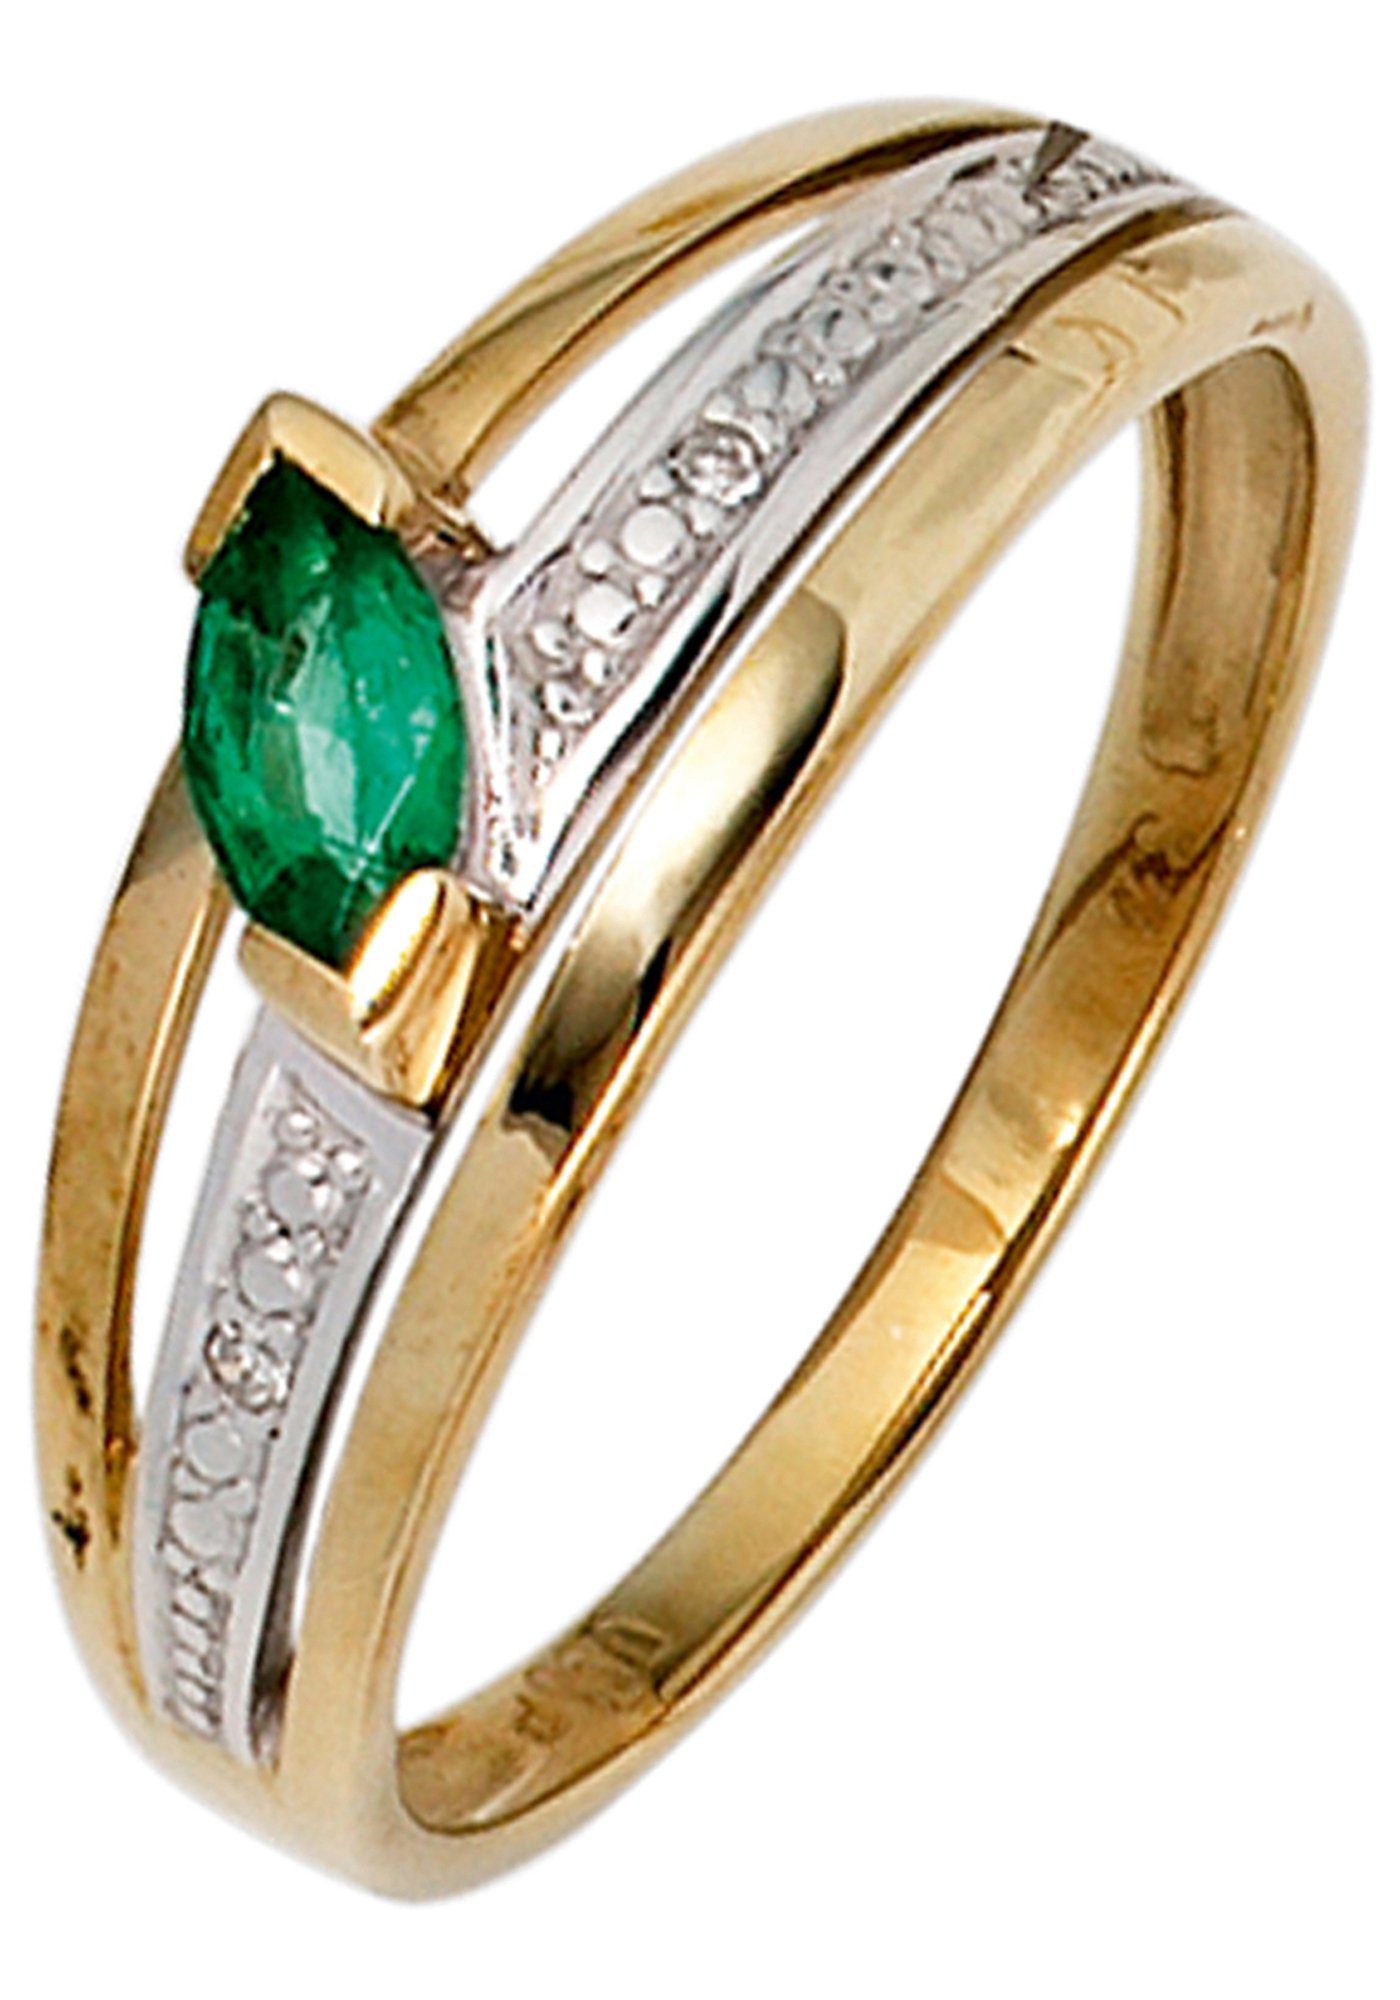 JOBO Diamantring, 585 Gold bicolor mit 2 Diamanten und Smaragd